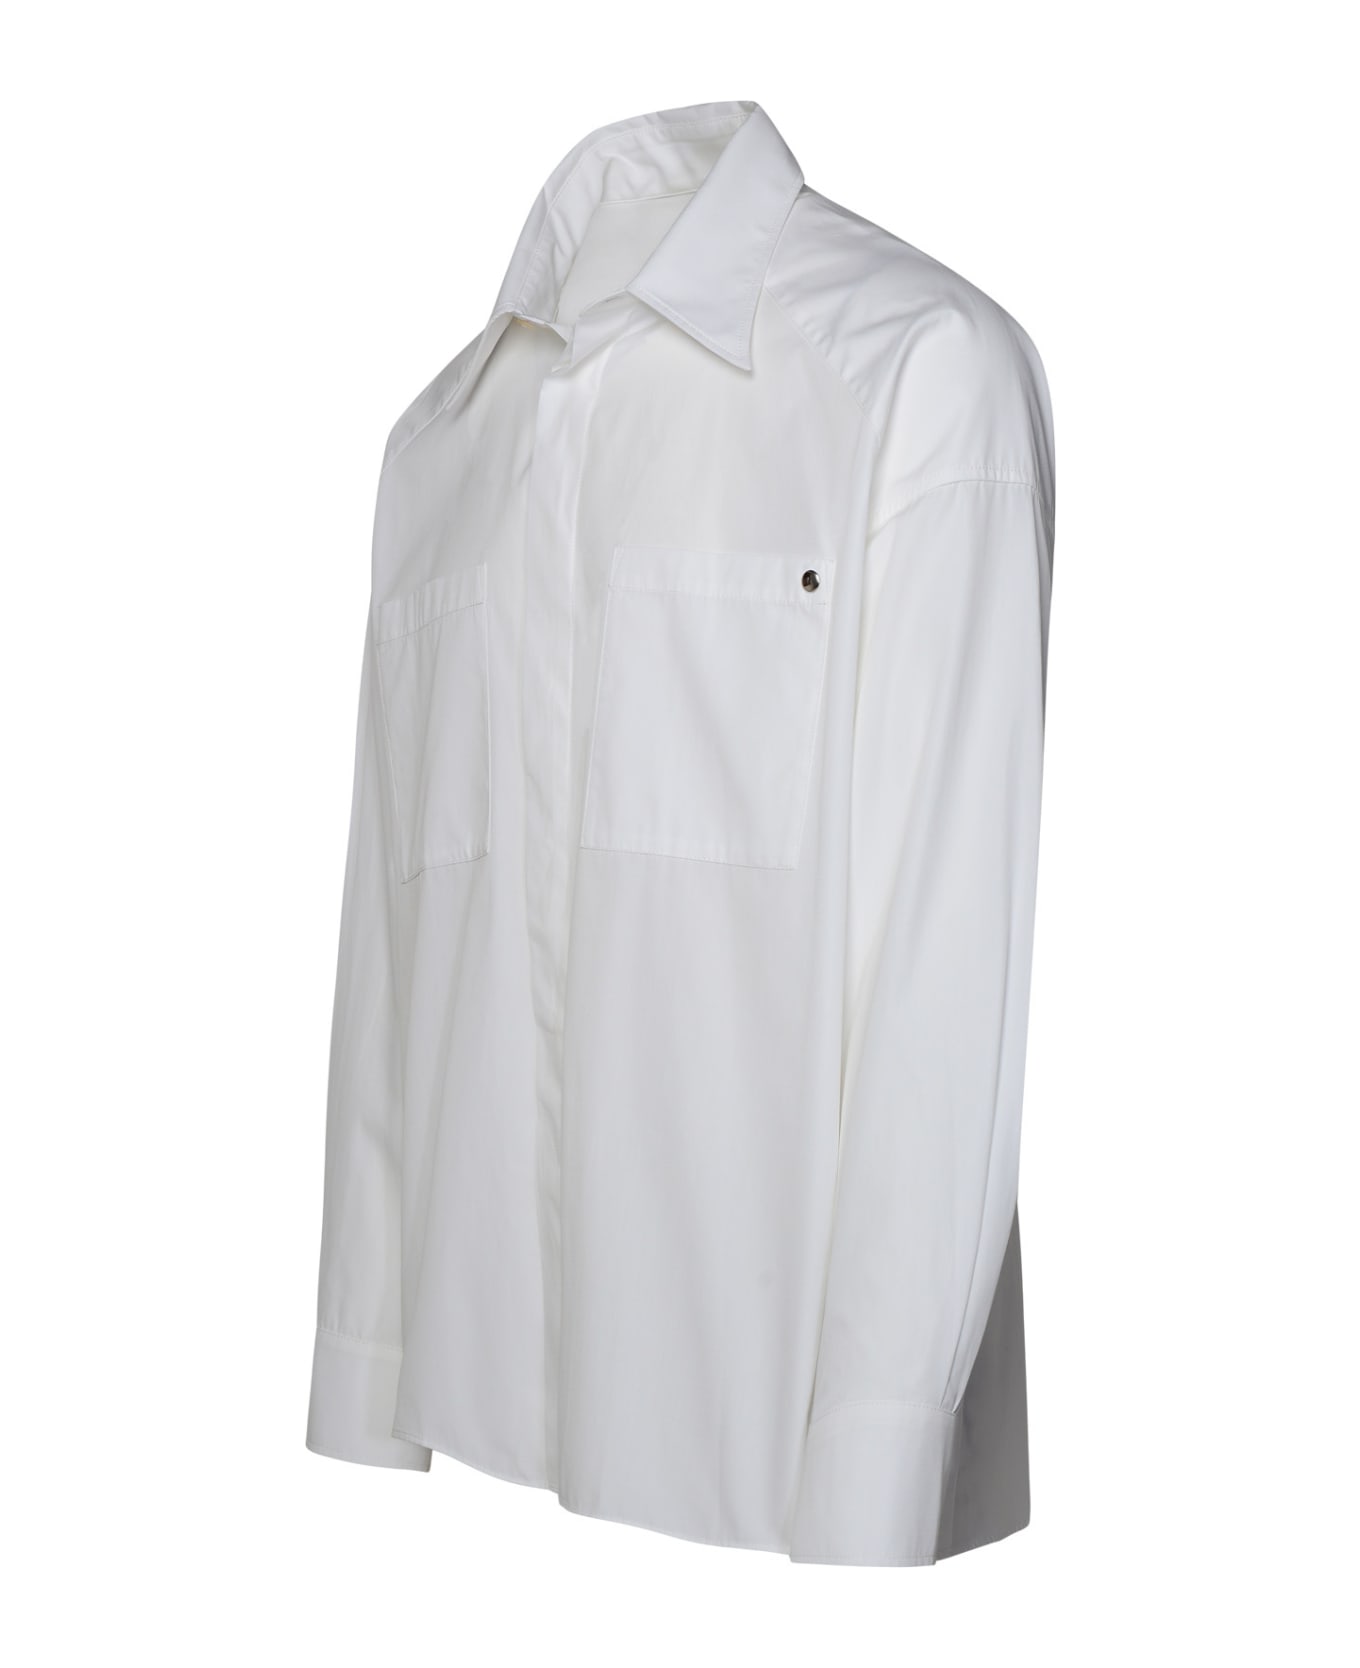 A.P.C. White Cotton Shirt - White シャツ